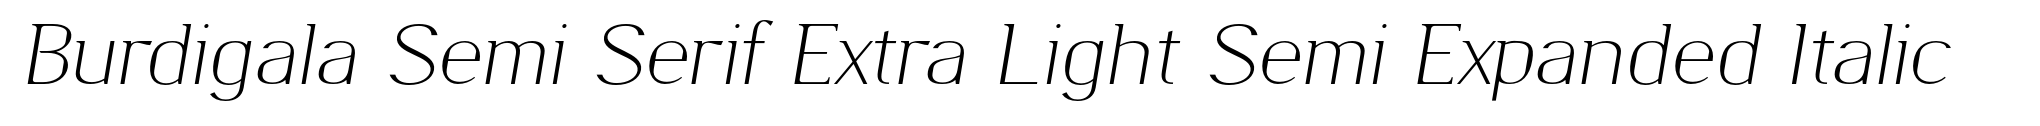 Burdigala Semi Serif Extra Light Semi Expanded Italic image